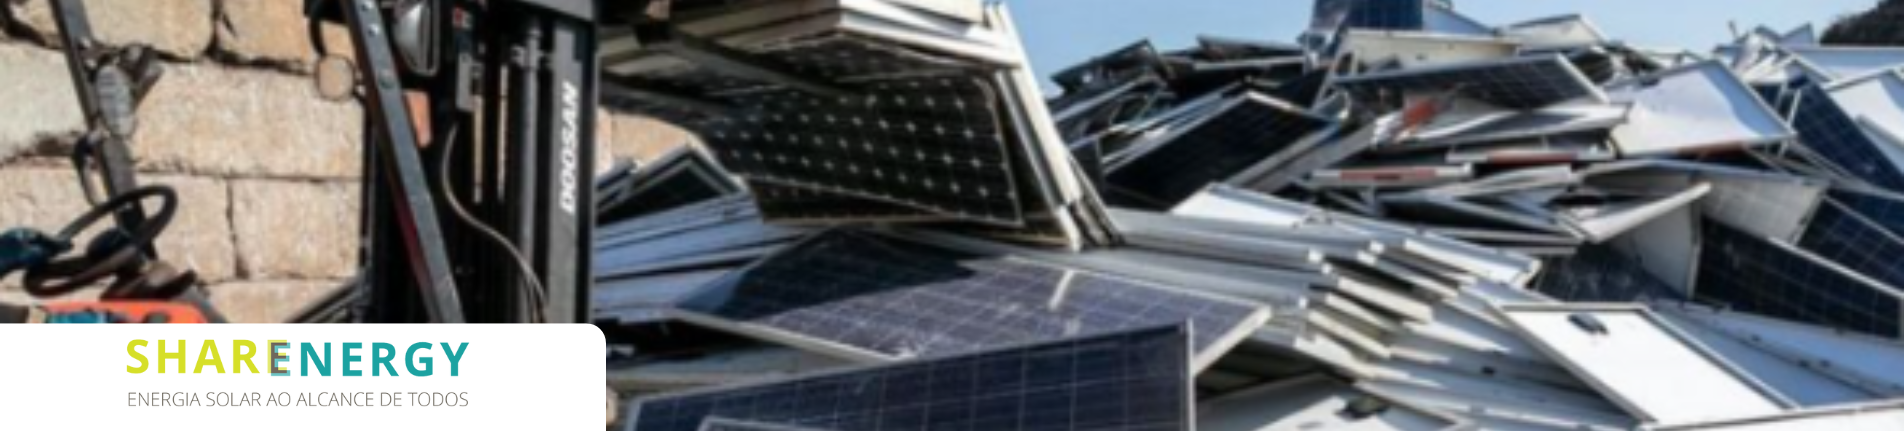 Reciclagem de painel solar: desafios no mercado de energia